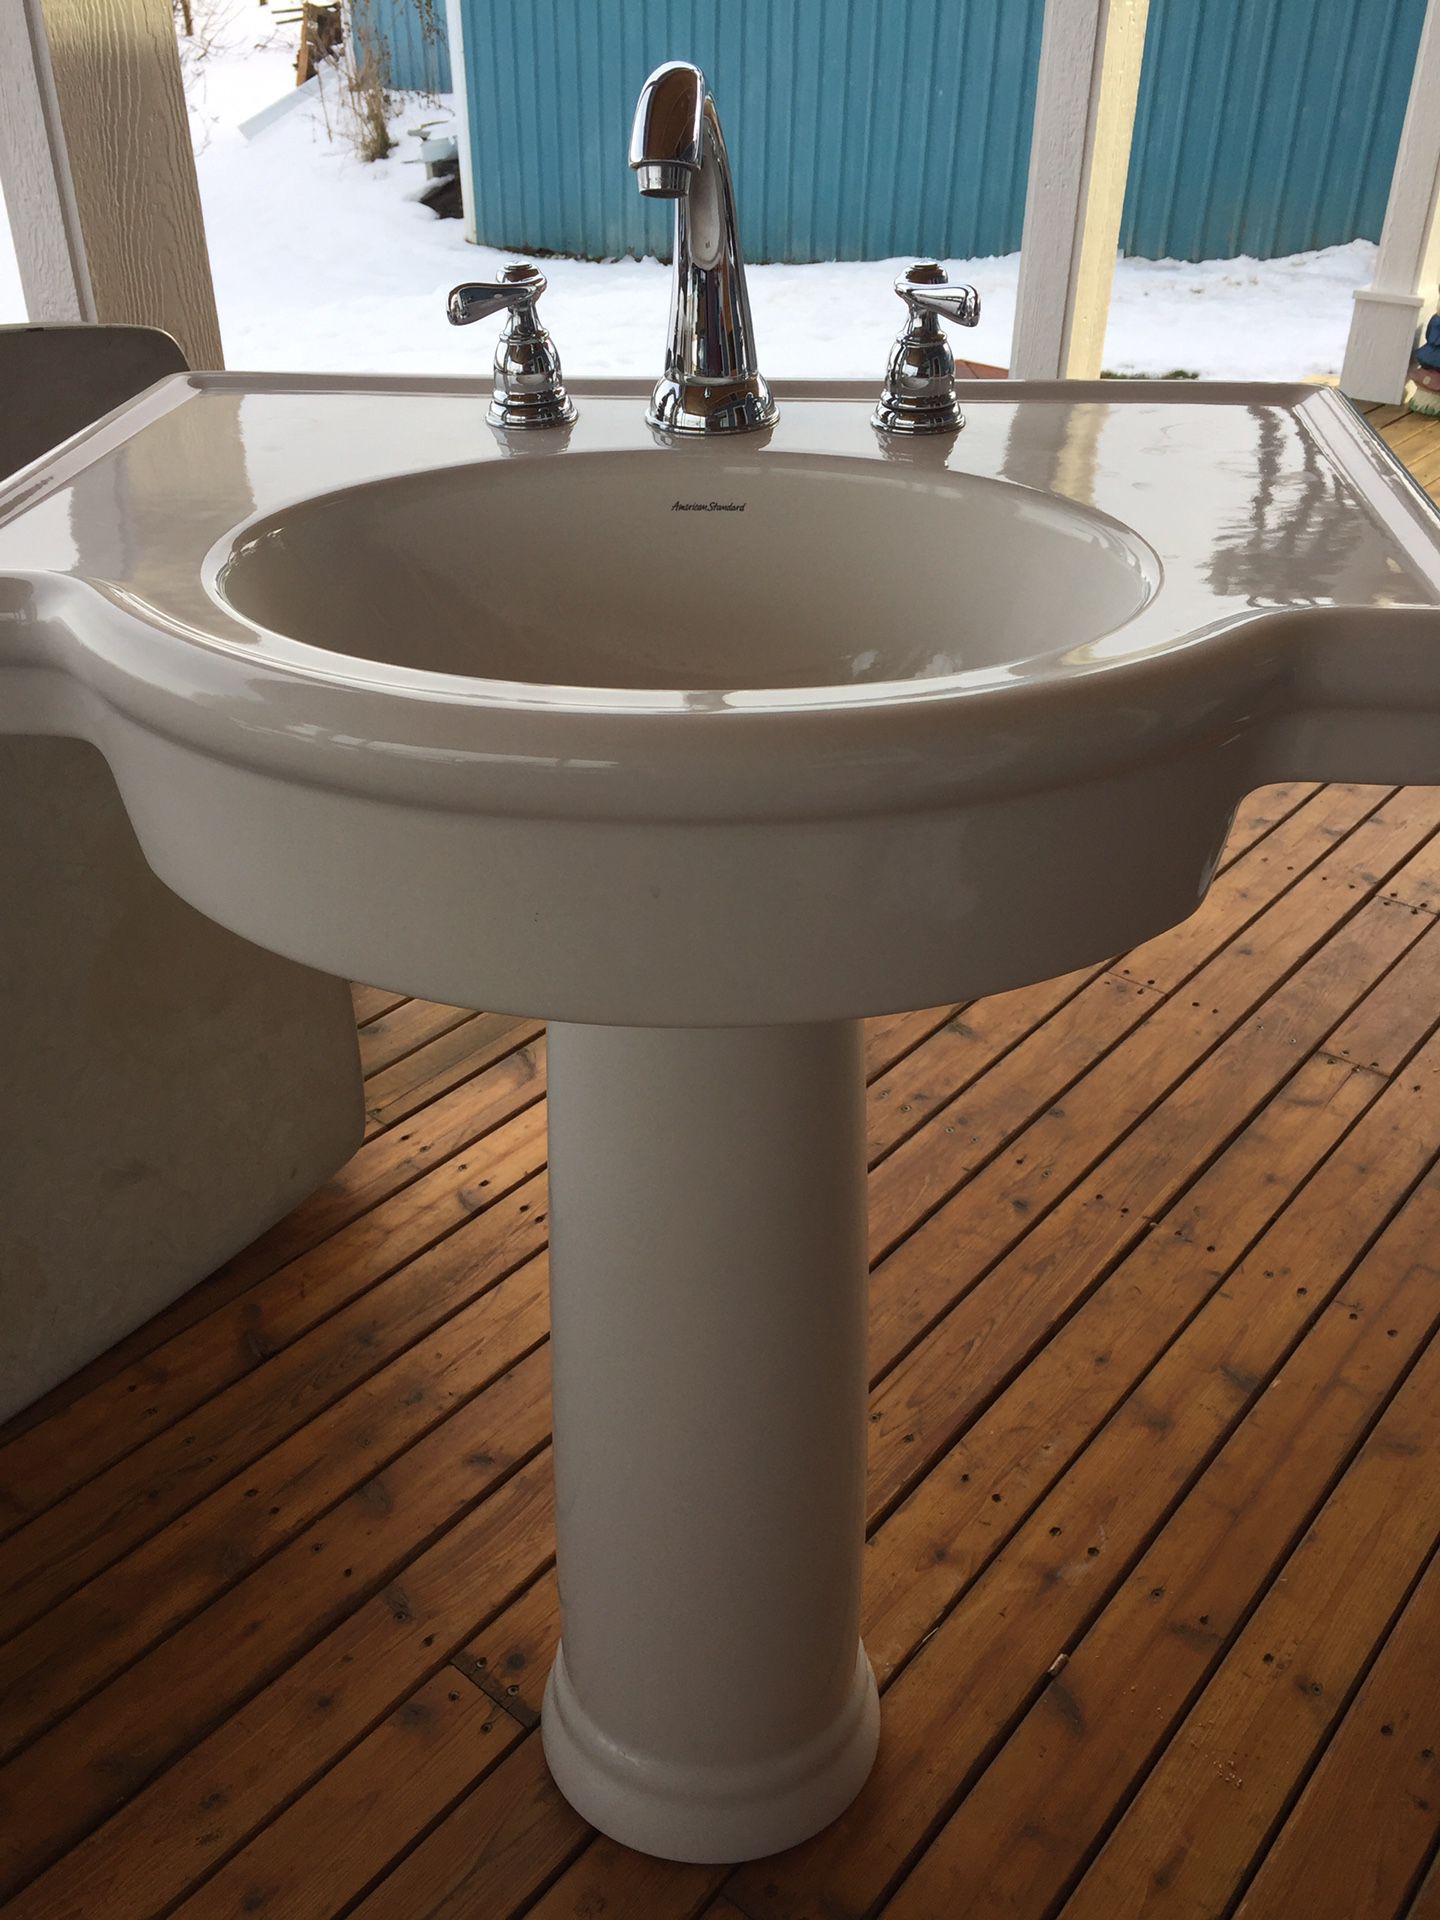 Beautiful American Standard pedestal sink with faucet